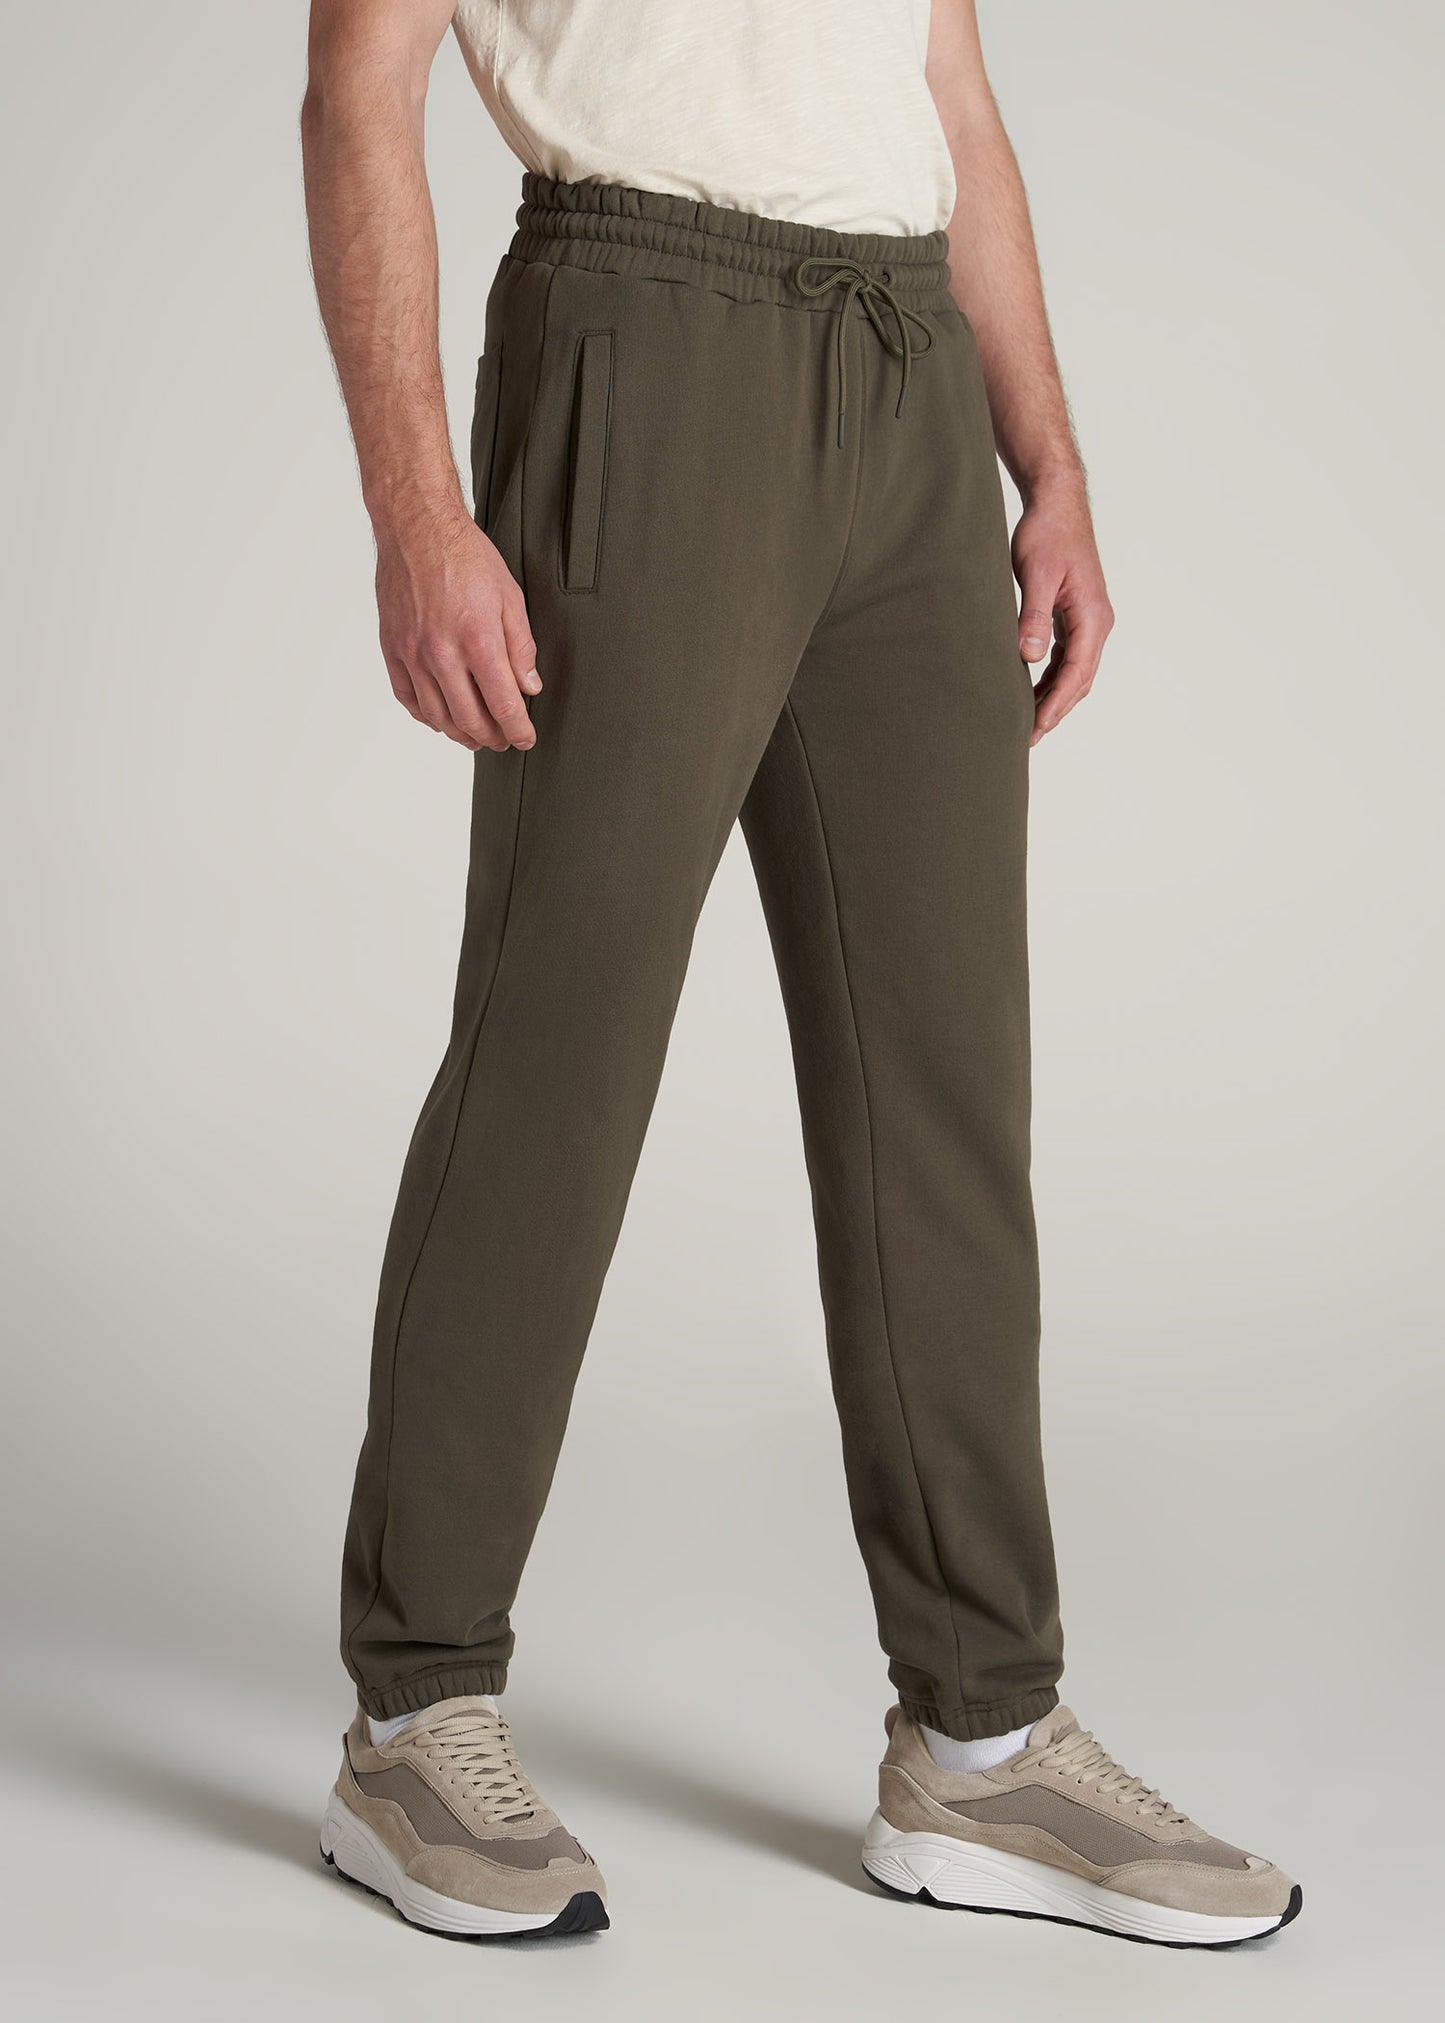    American-Tall-Men-Fleece-Sweatpants-Elastic-Bottom-Camo-Green-side